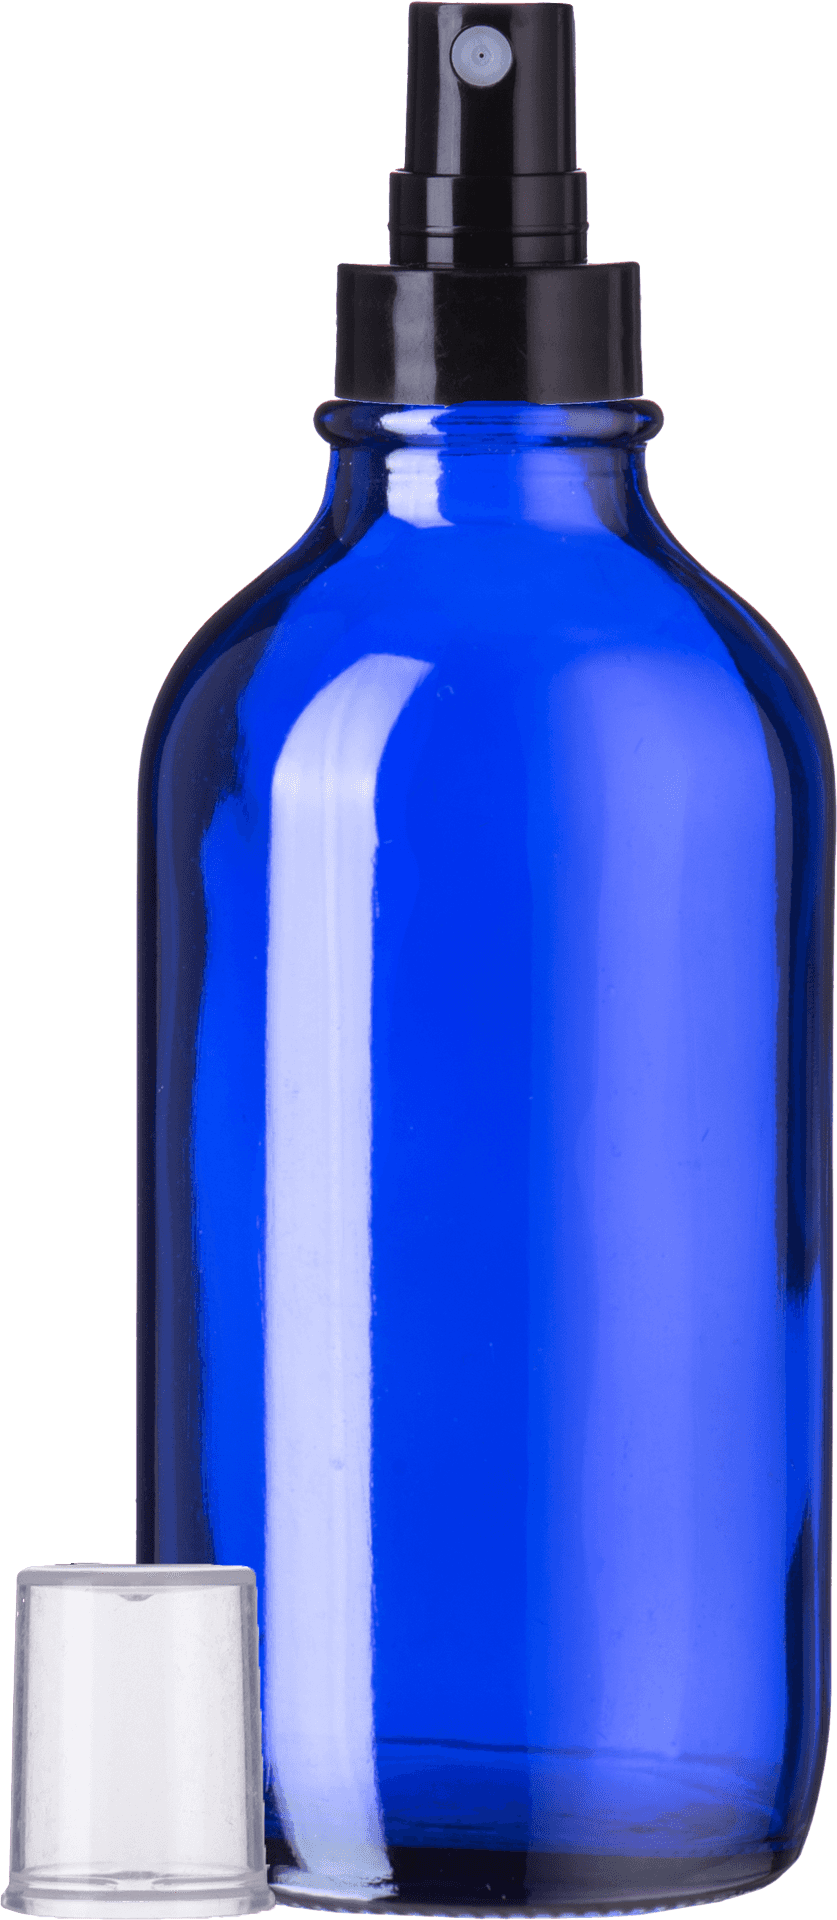 Blue Glass Spray Bottle PNG image